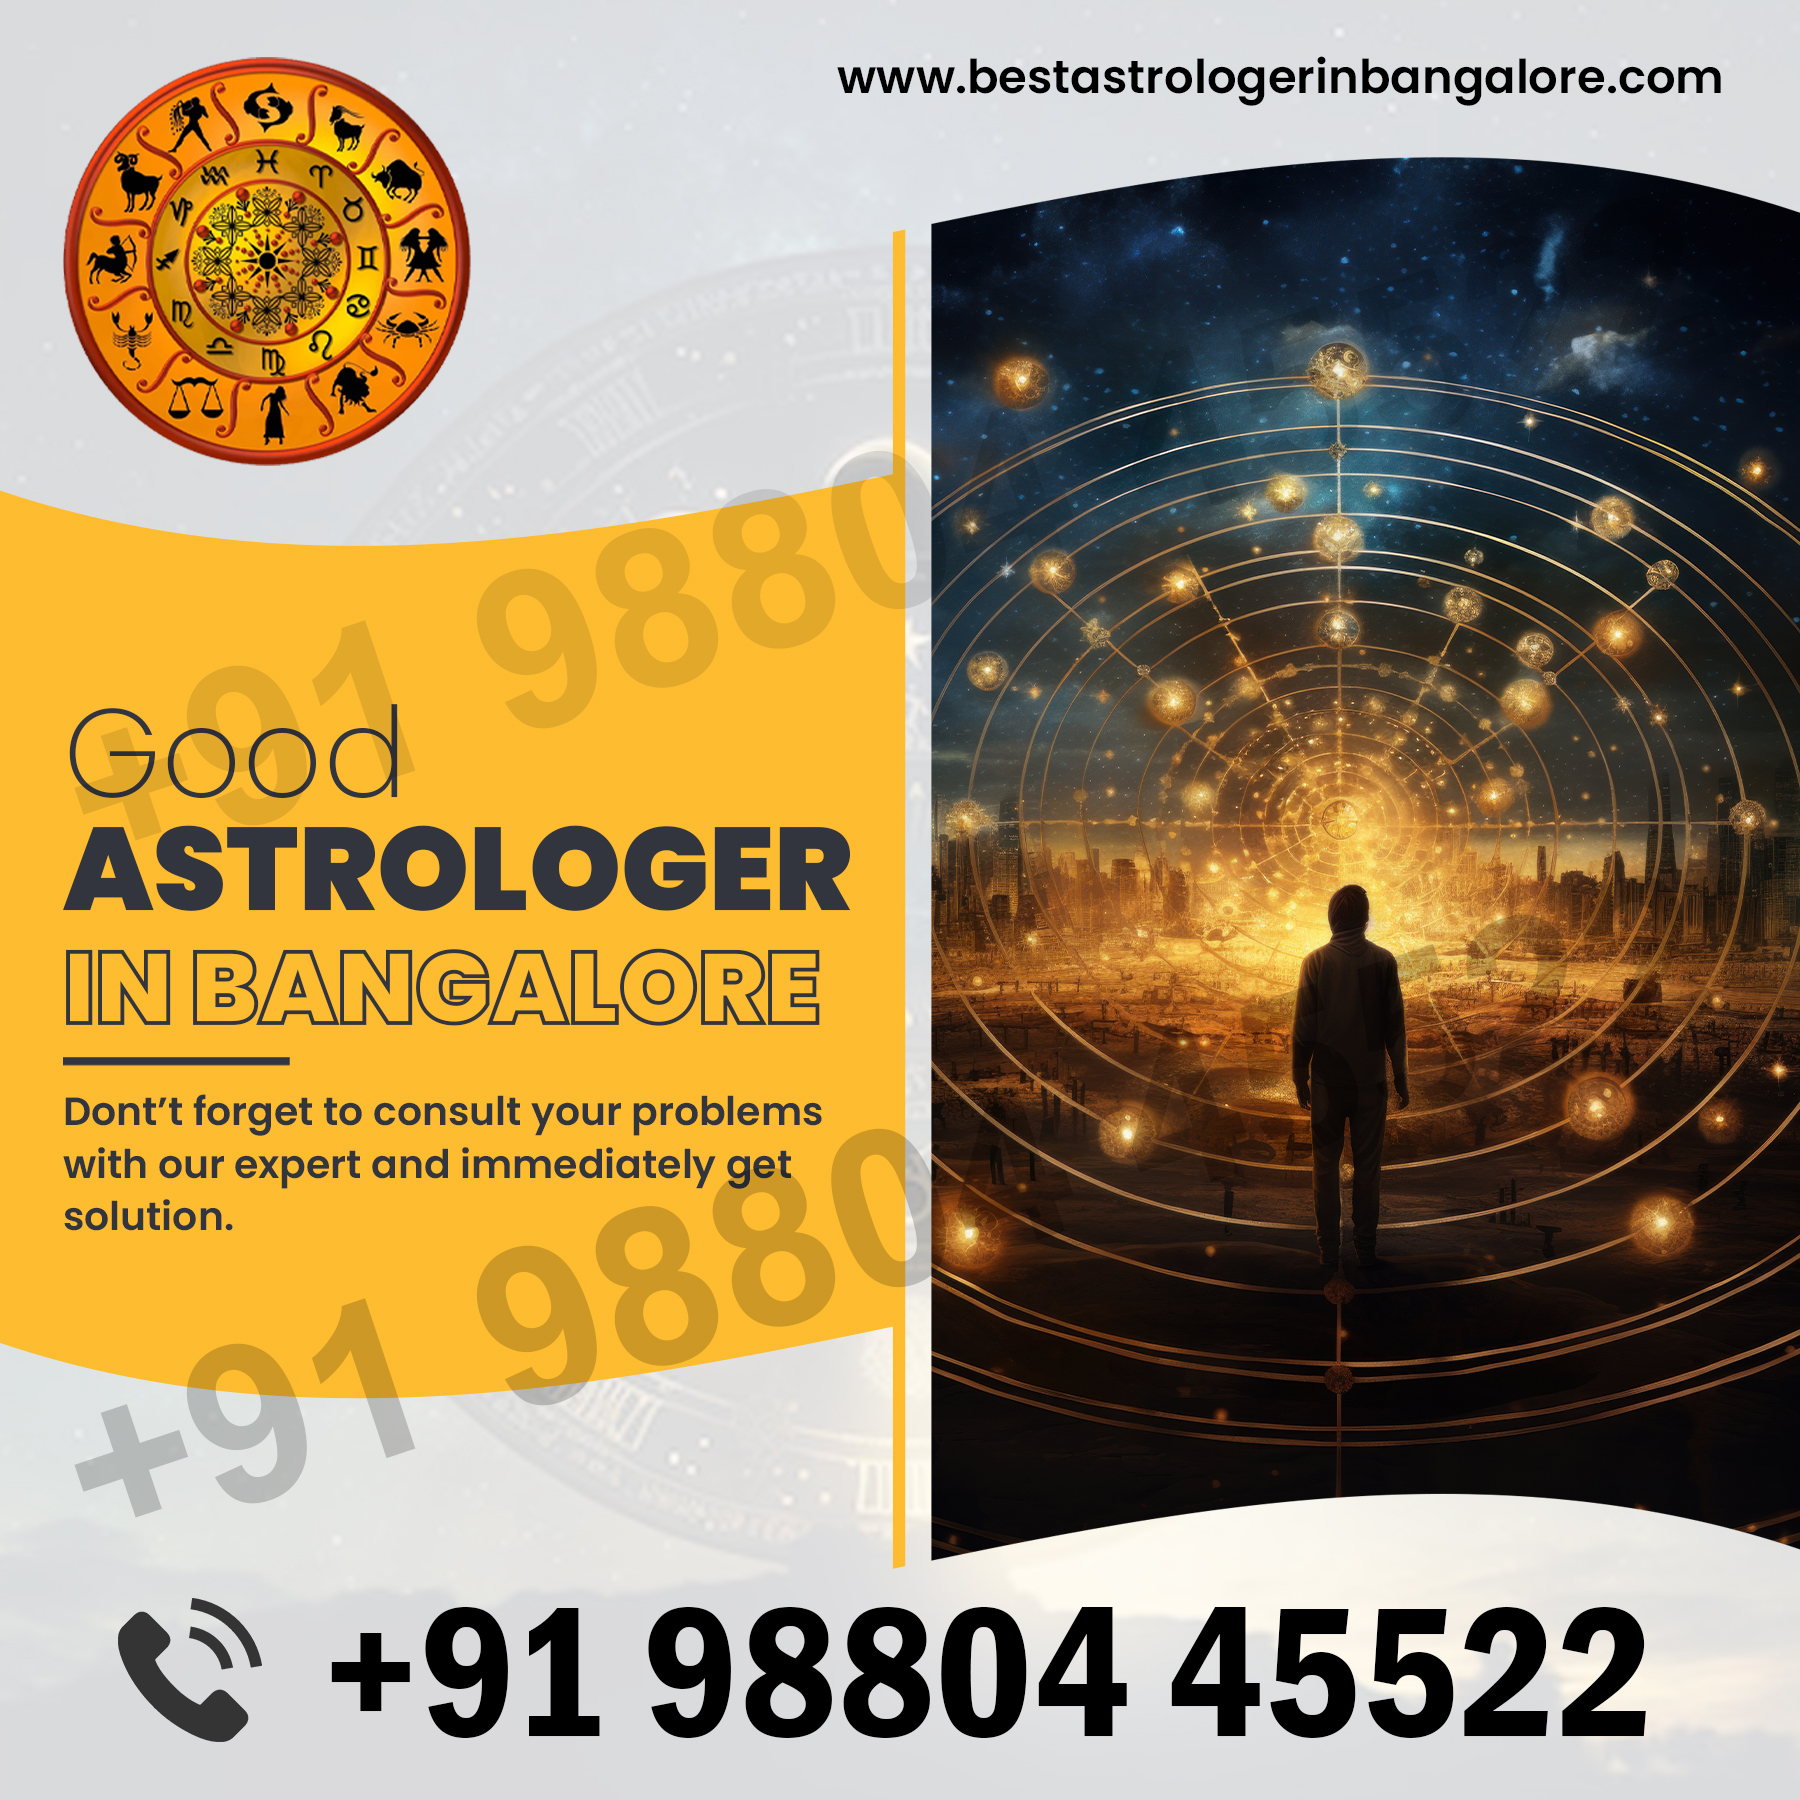 Good Astrologer in Bangalore